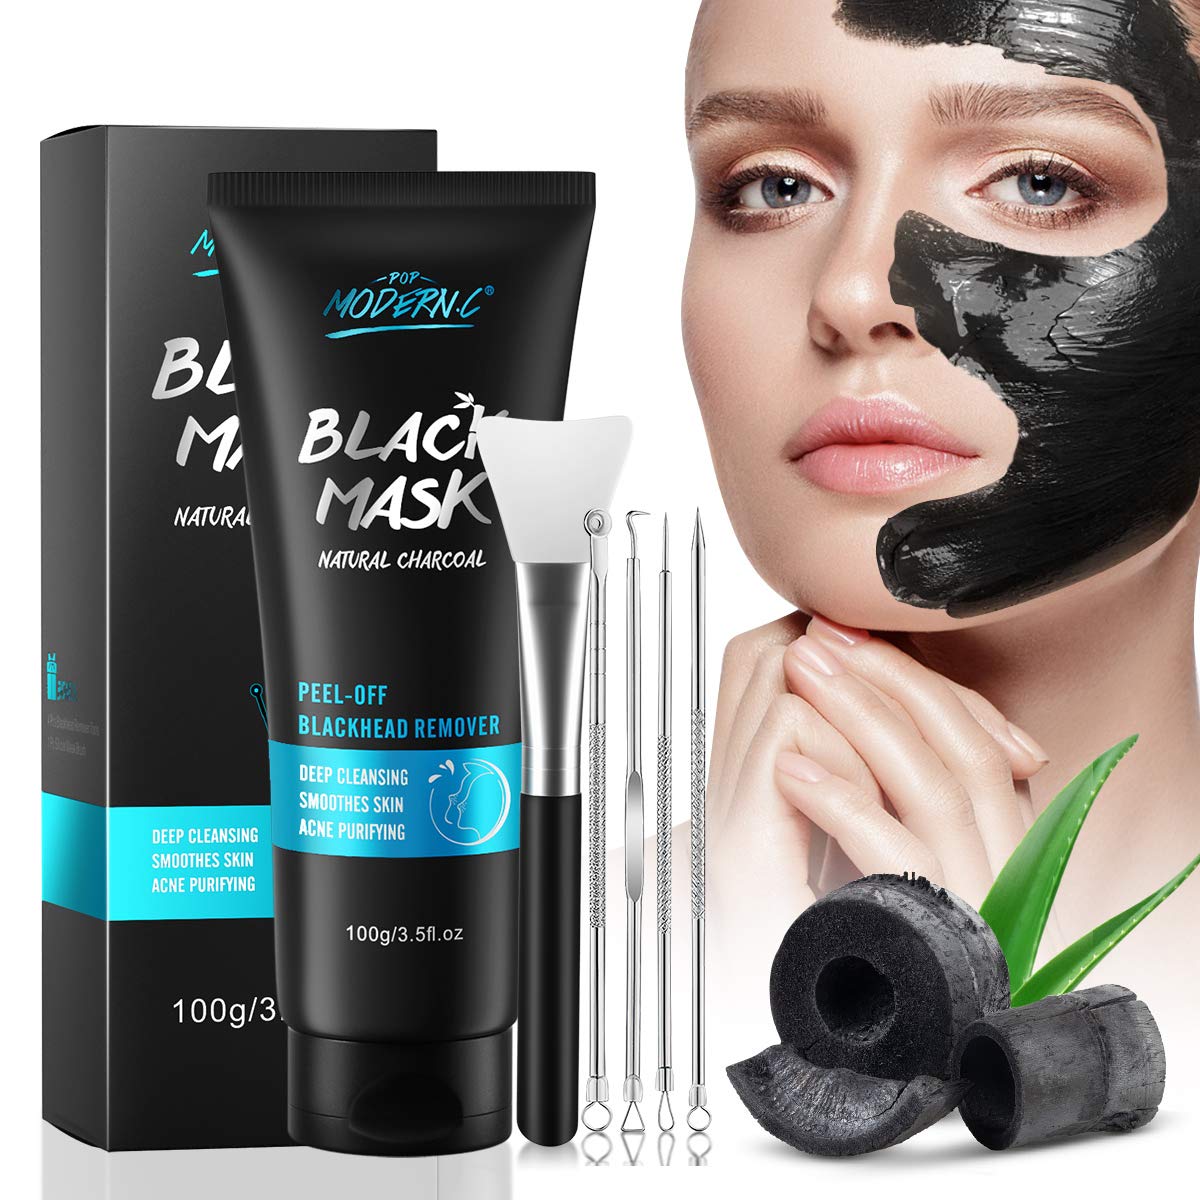 Blackheads маска. Black Mask. Black Mask Stick Bamboo Charcoal Mask Cheal. Dr. Althea Pore-Control Charcoal Mask. Black Peel off Mask hav Mach.